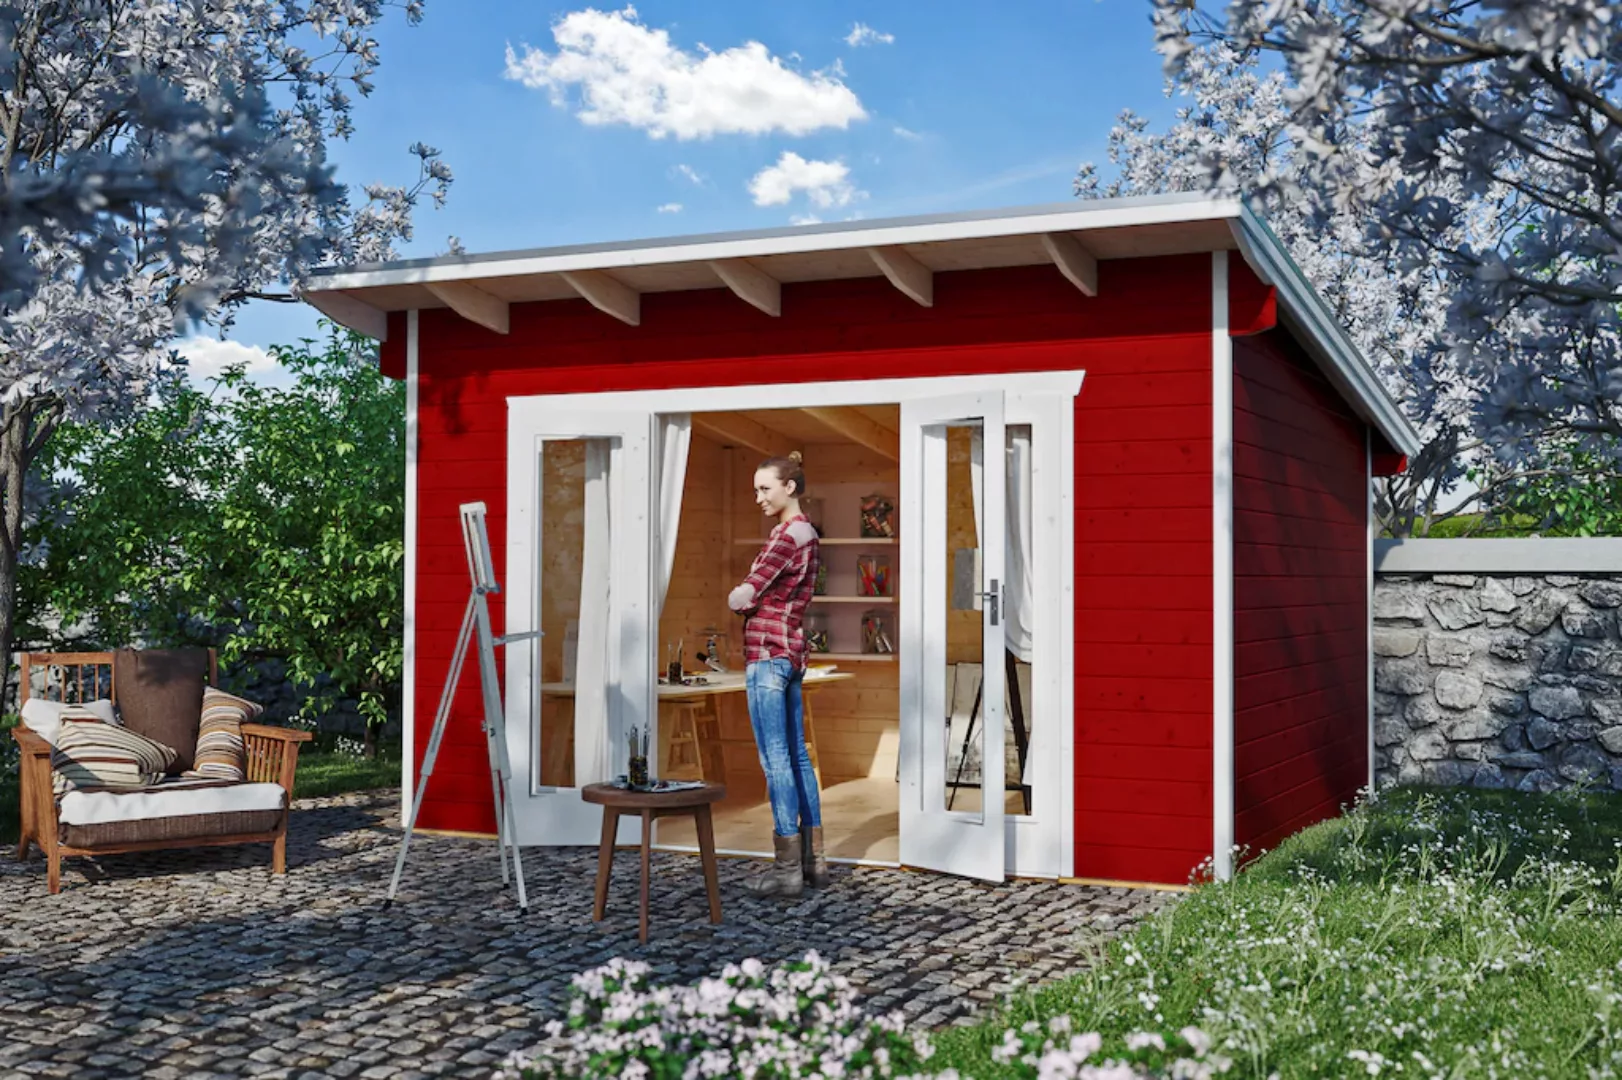 Skan Holz Holz-Gartenhaus Ostende 1 Schwedenrot 350 cm x 250 cm günstig online kaufen